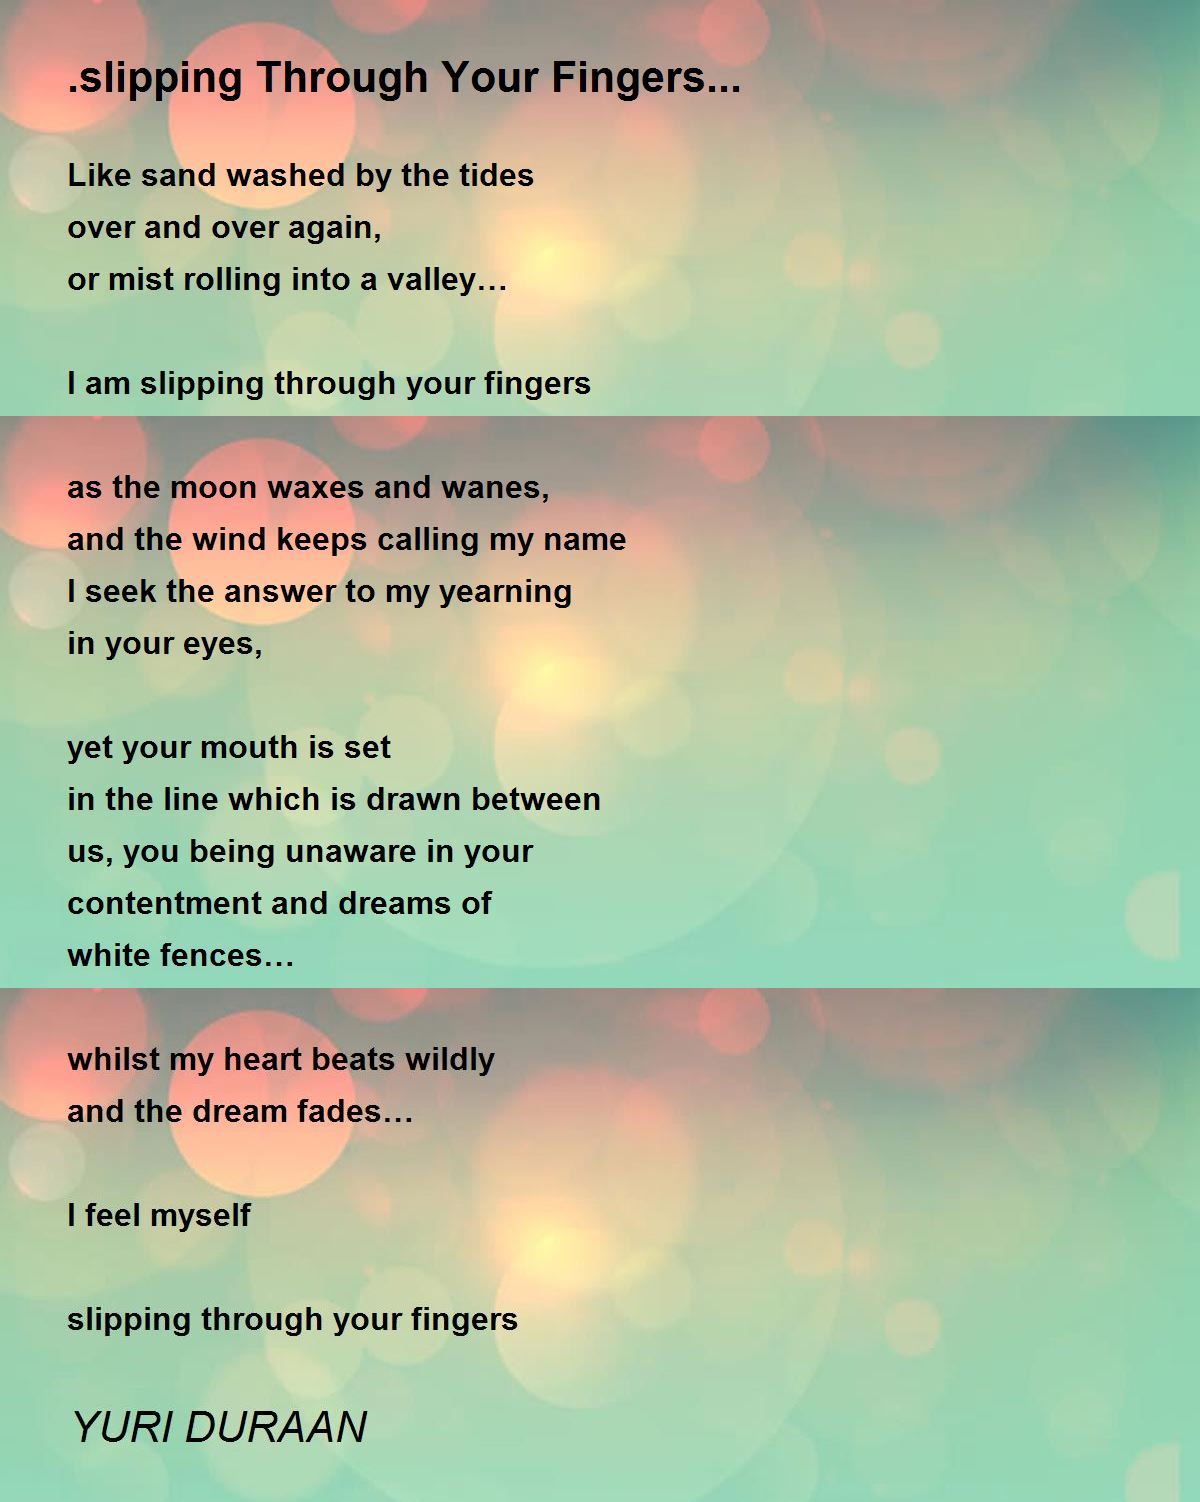 .slipping Through Your Fingers... Poem by YURI DURAAN - Poem Hunter